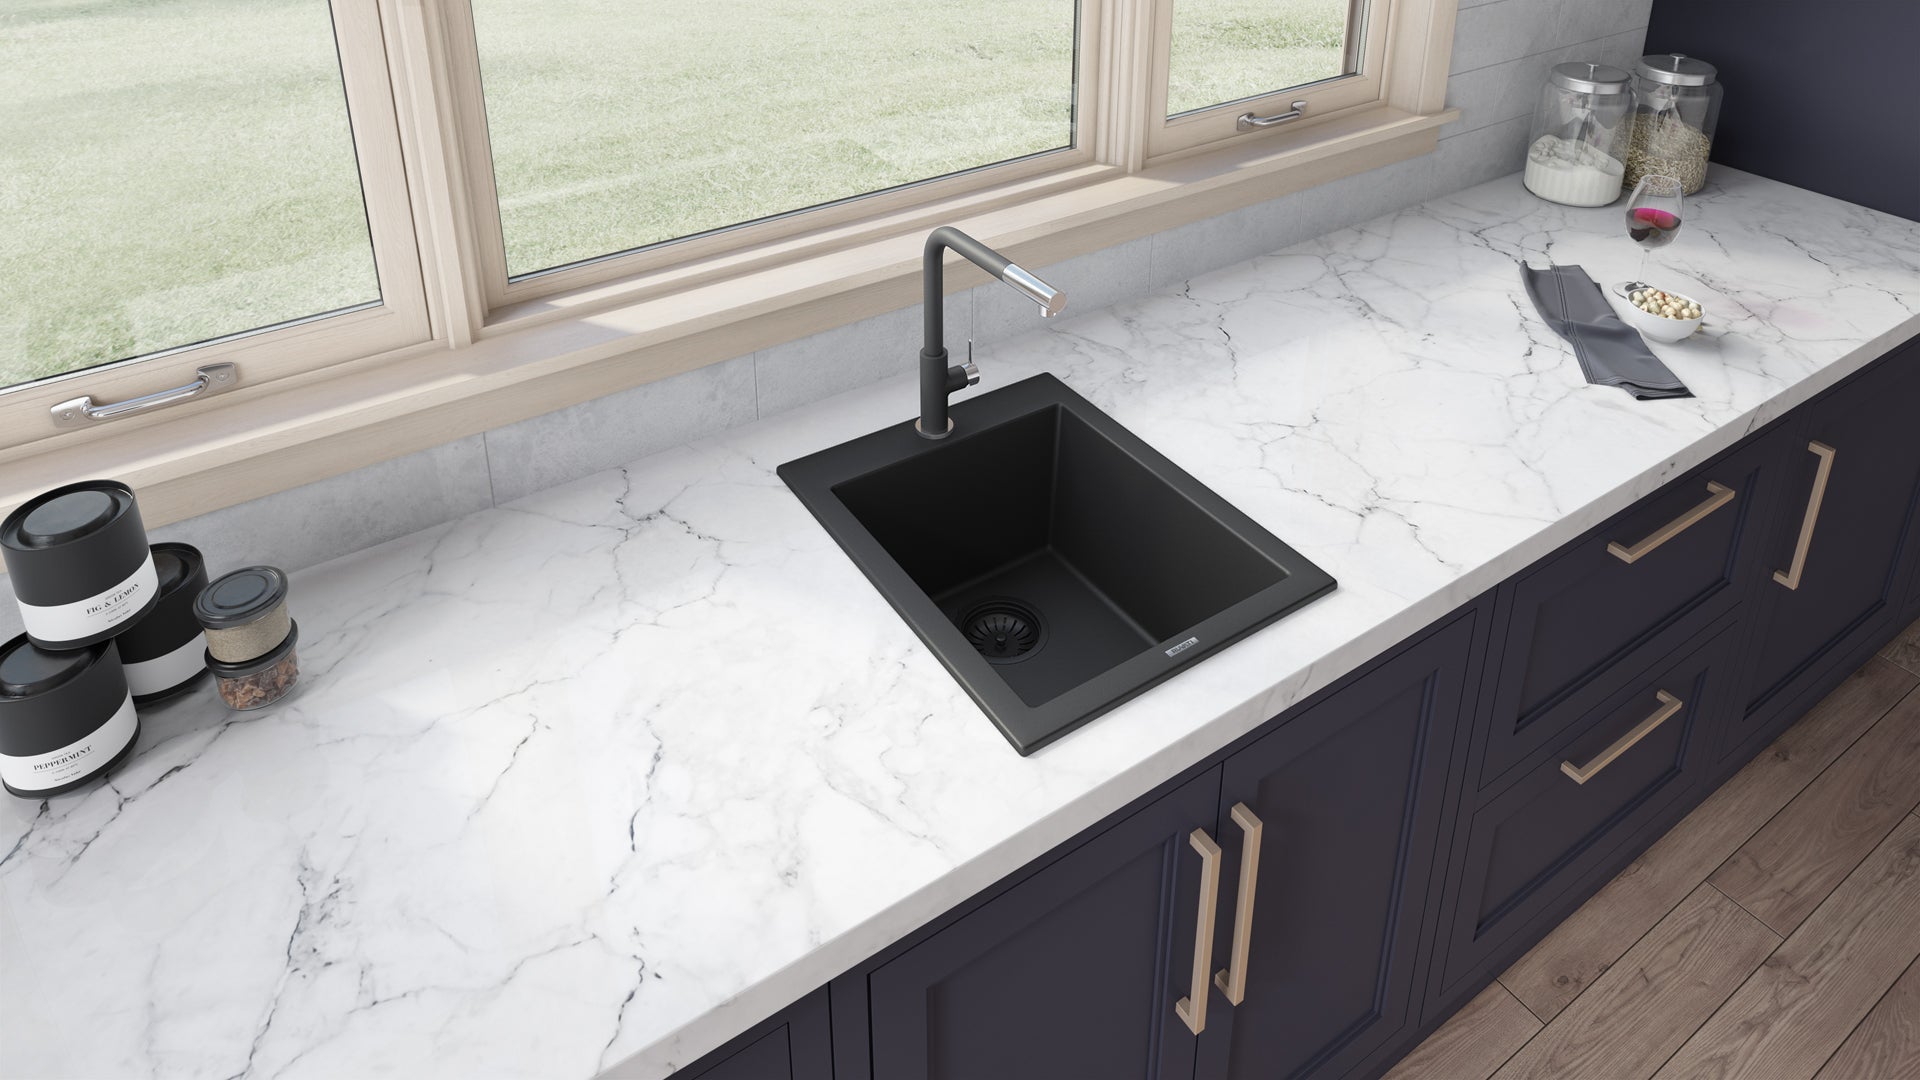 Ruvati 16 x 20" epiGranite Dual-Mount Granite Composite Single Bowl Kitchen Sink